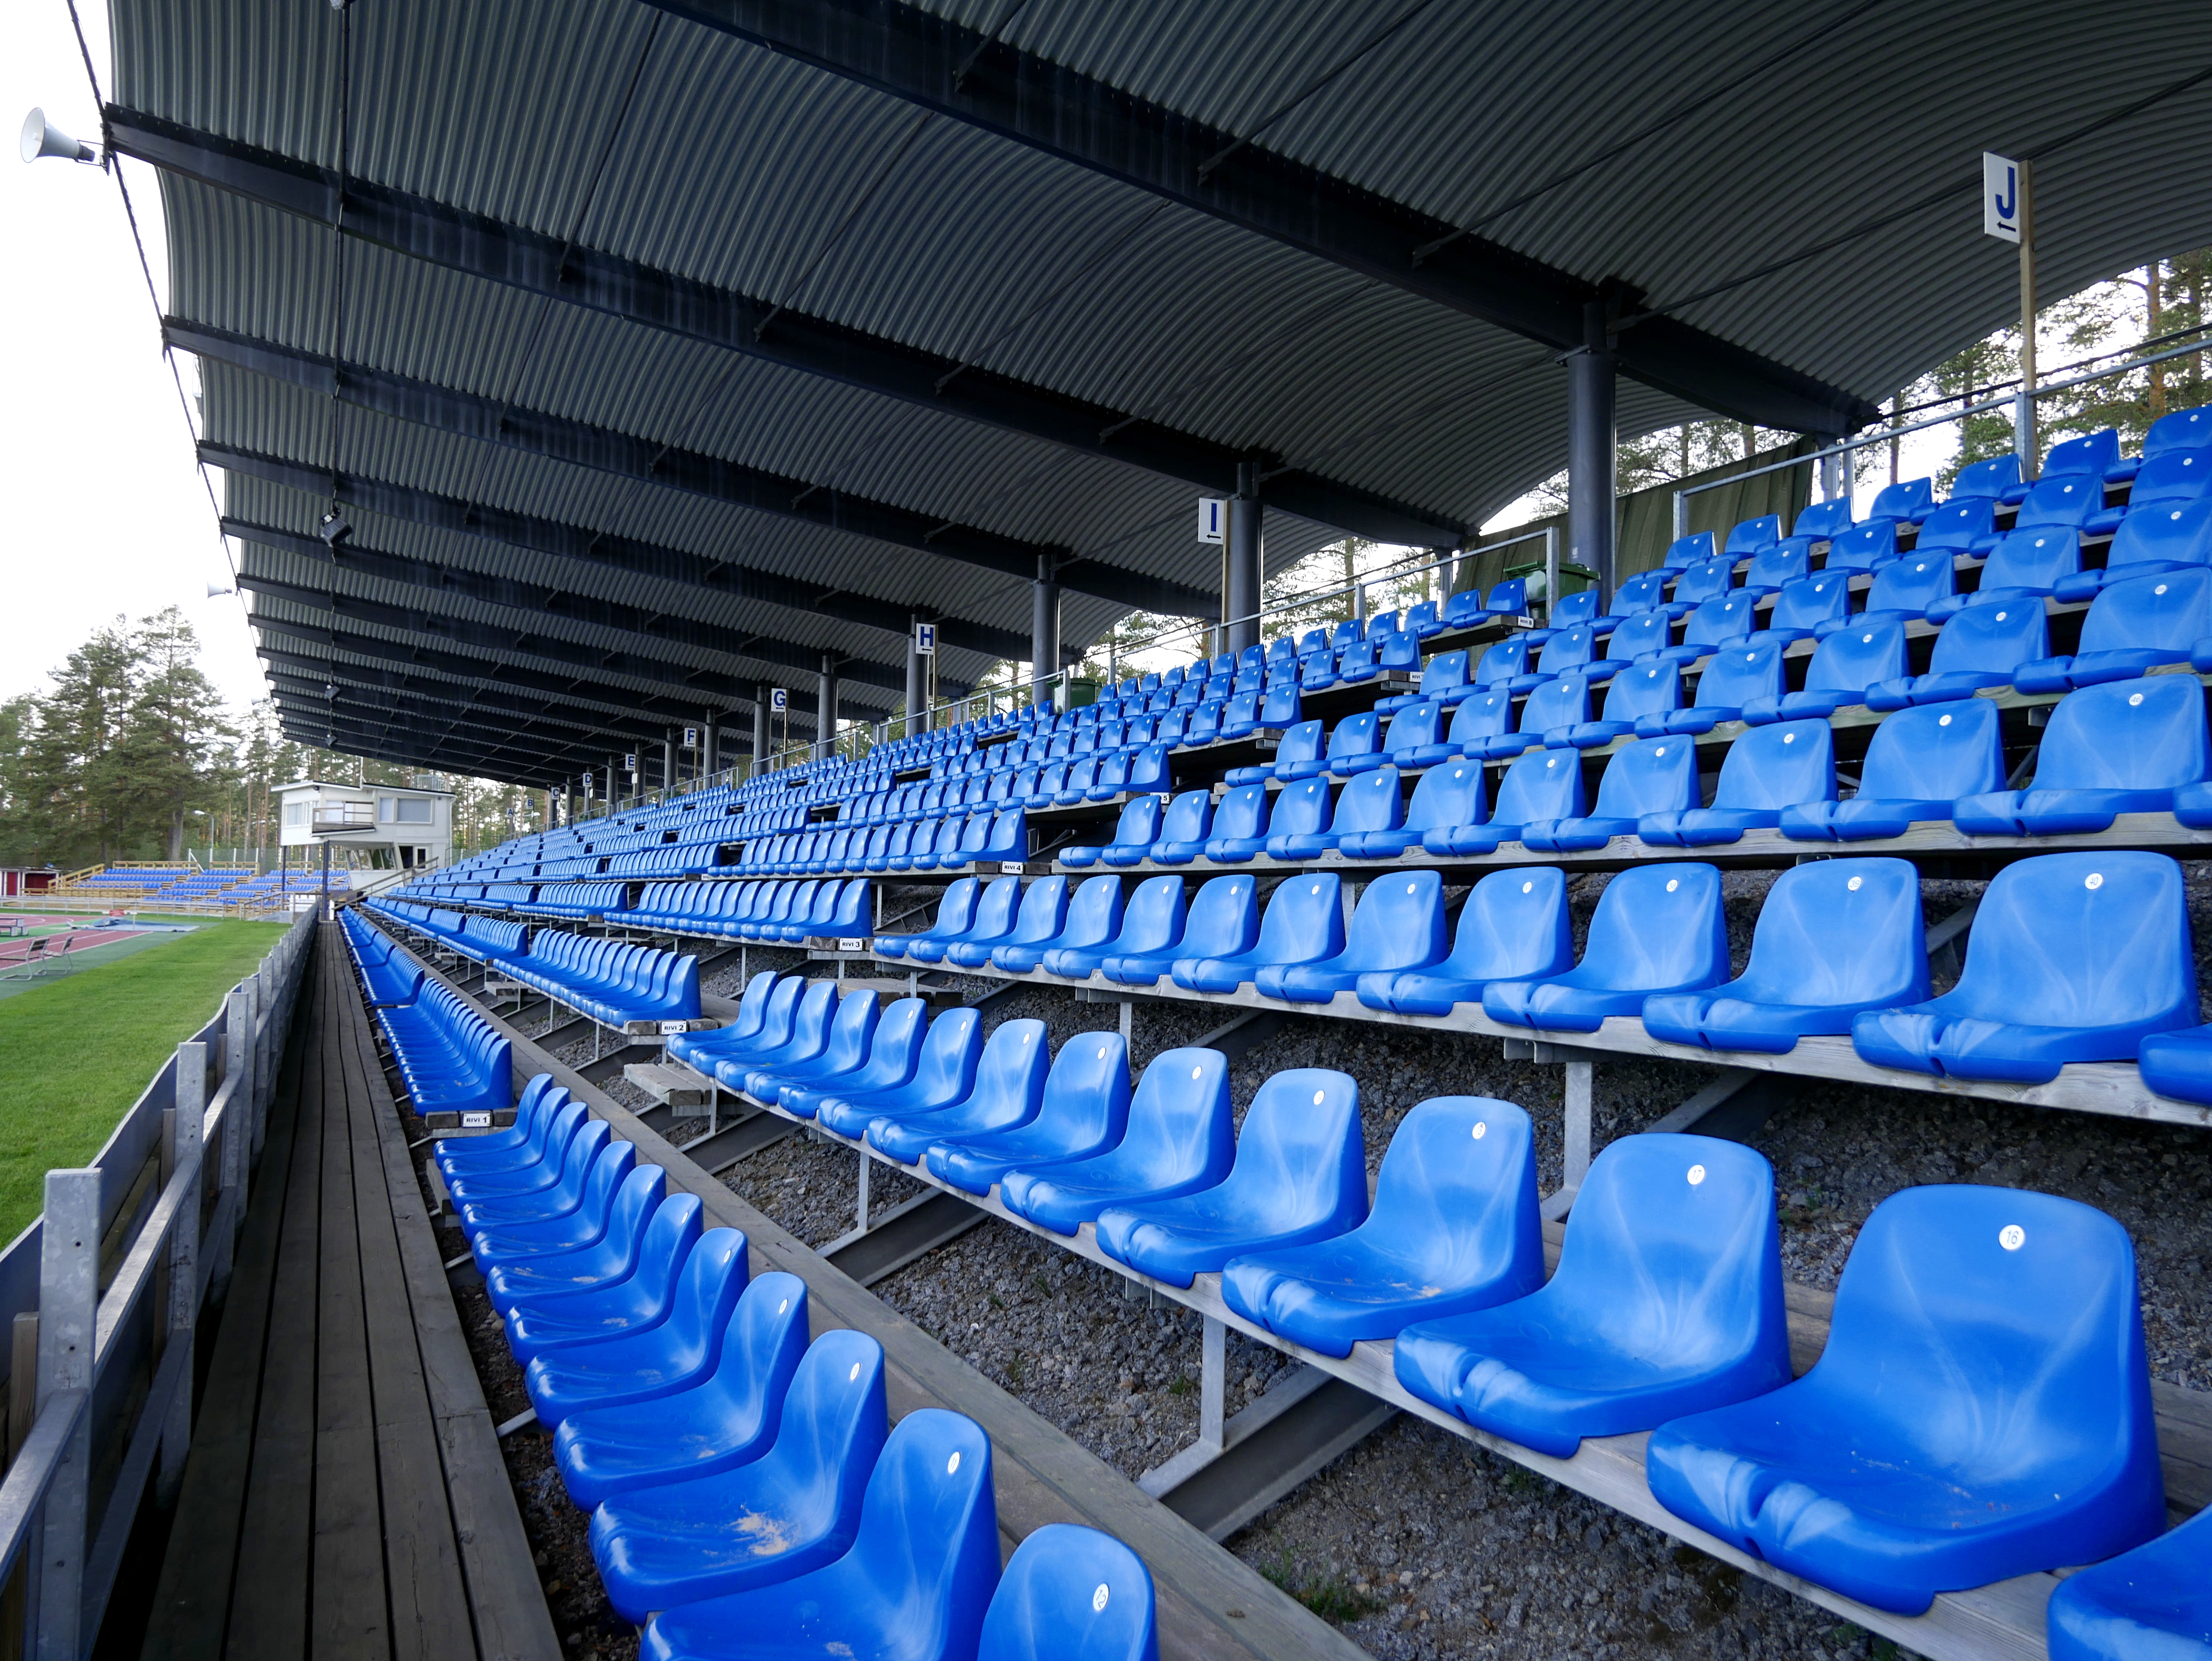 https://upload.wikimedia.org/wikipedia/commons/7/77/Blue_stadium_seats_2017.jpg